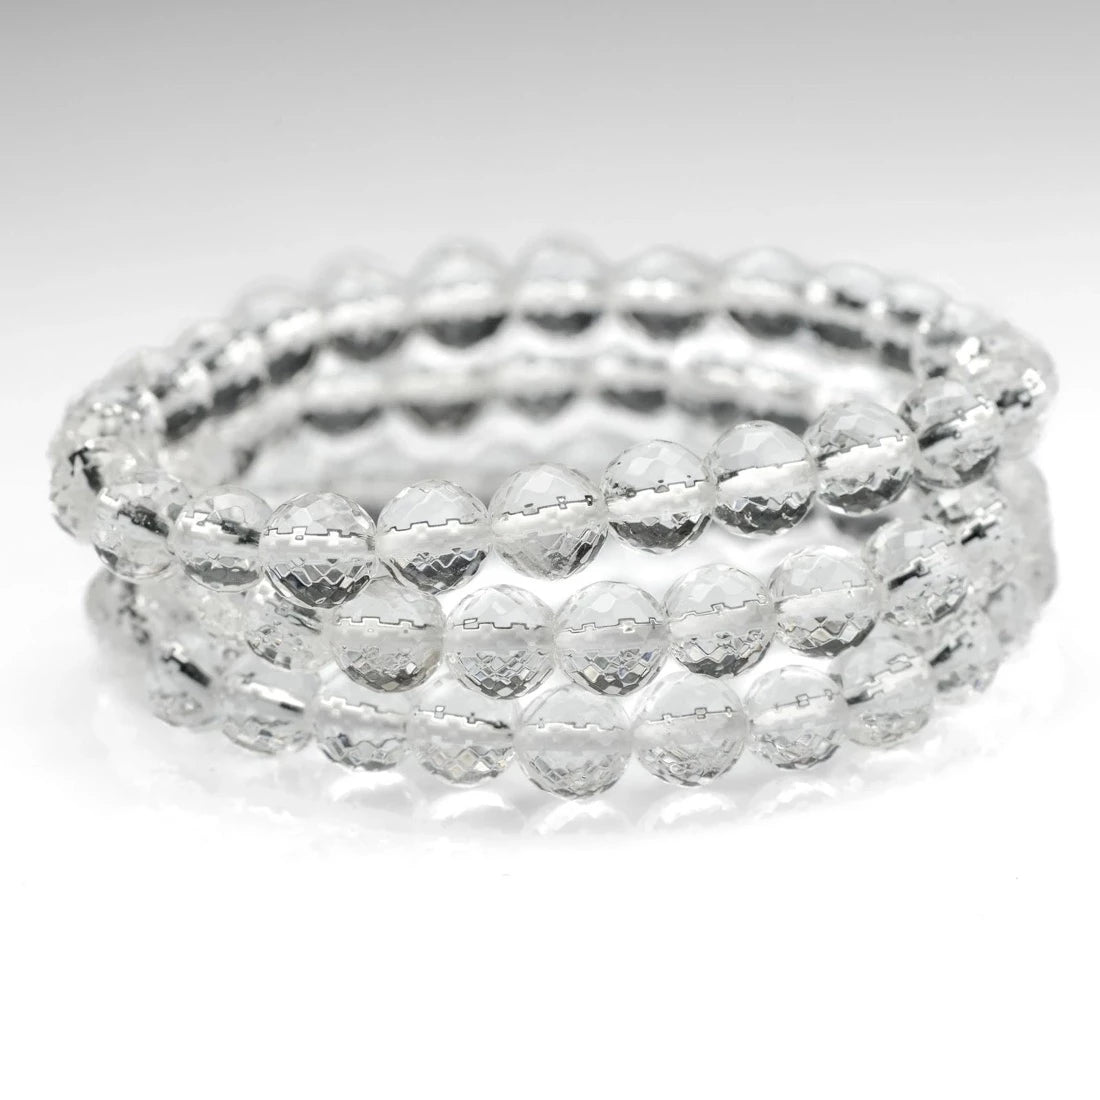 healing crystal jewelry: clear quartz crystal bracelet - small beads